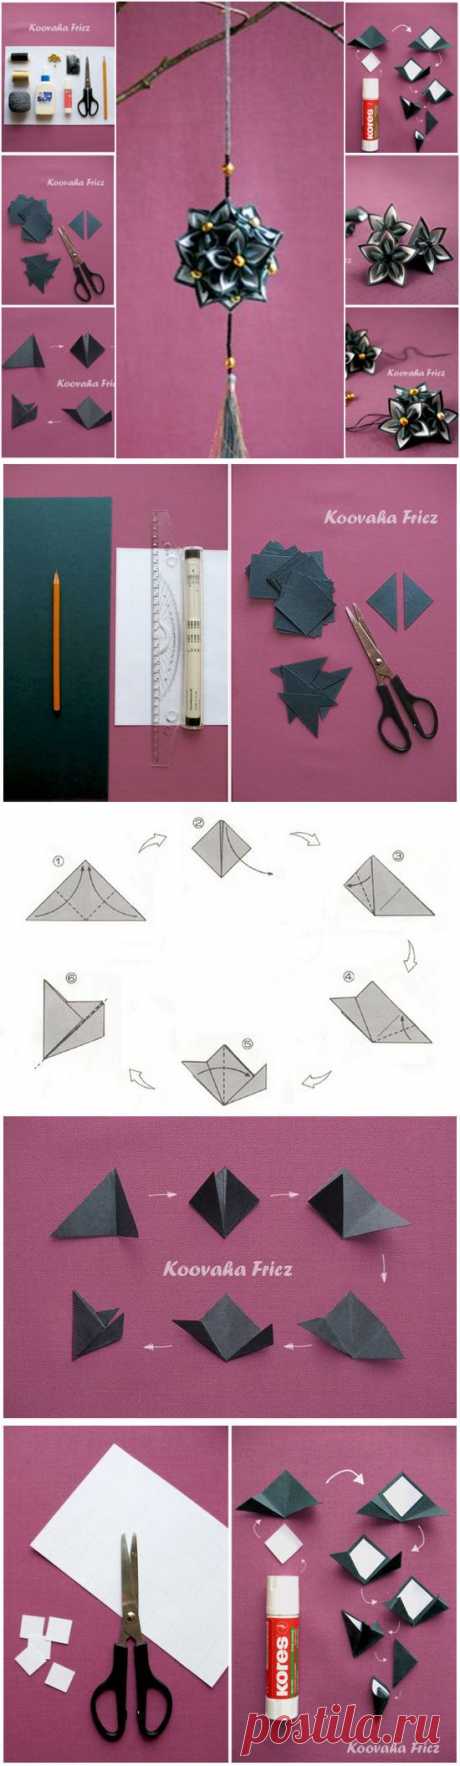 How to DIY Easy Origami Paper Flower Ball | www.FabArtDIY.com